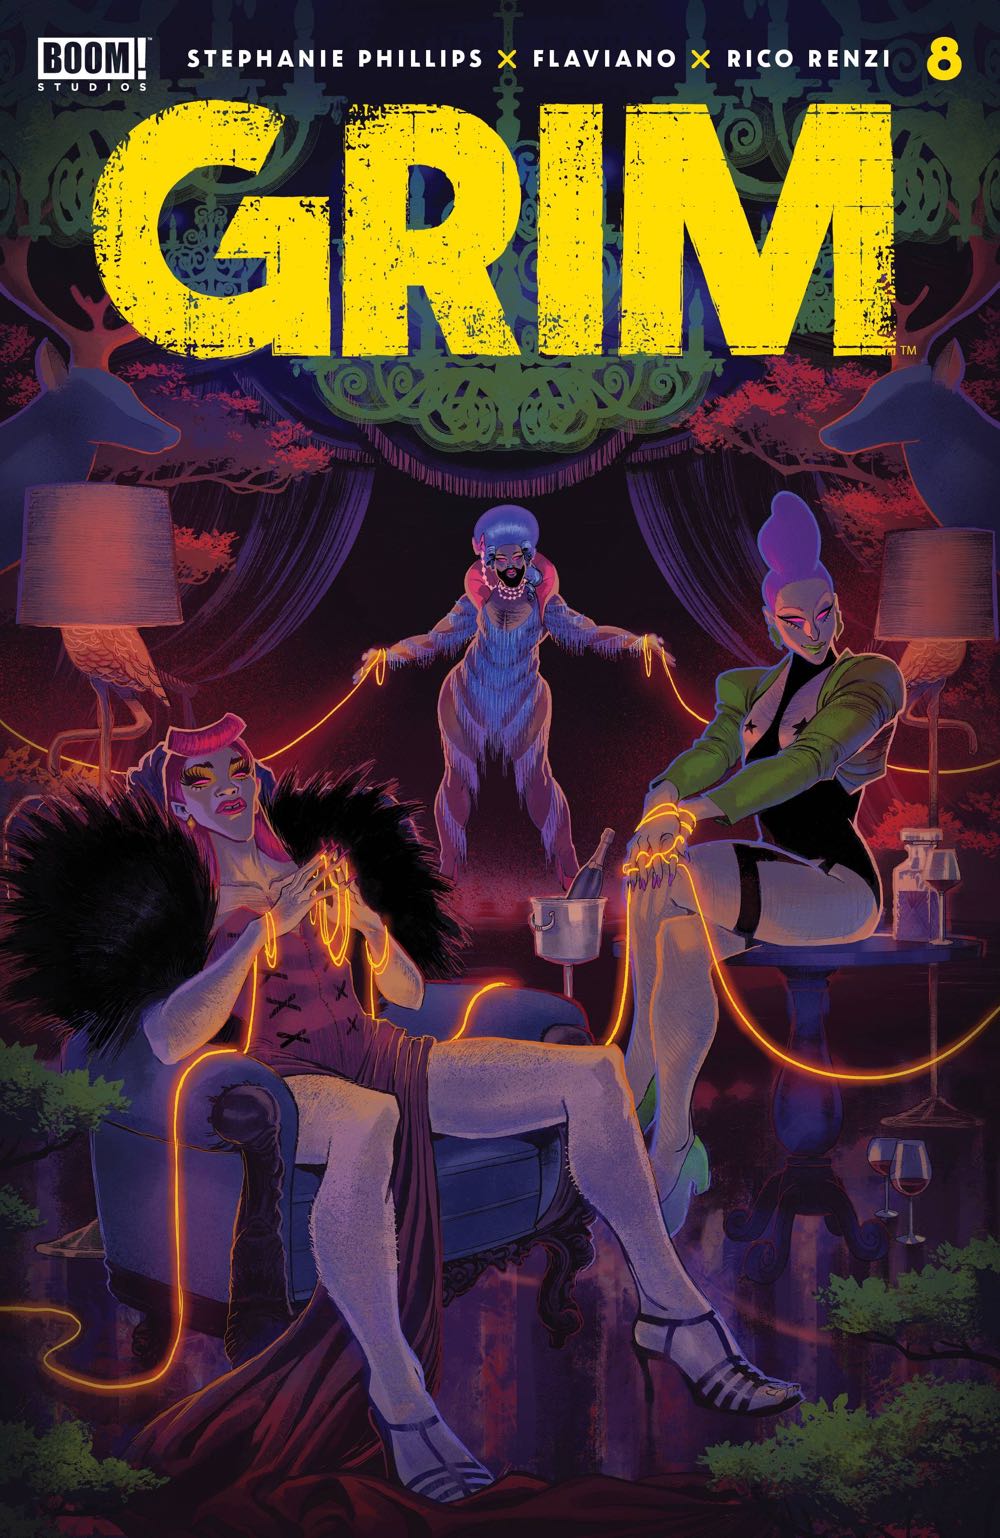 Grim - Boom! Studios (8 - Feb 2023) comic book collectible [Barcode 84428400856308011] - Main Image 1